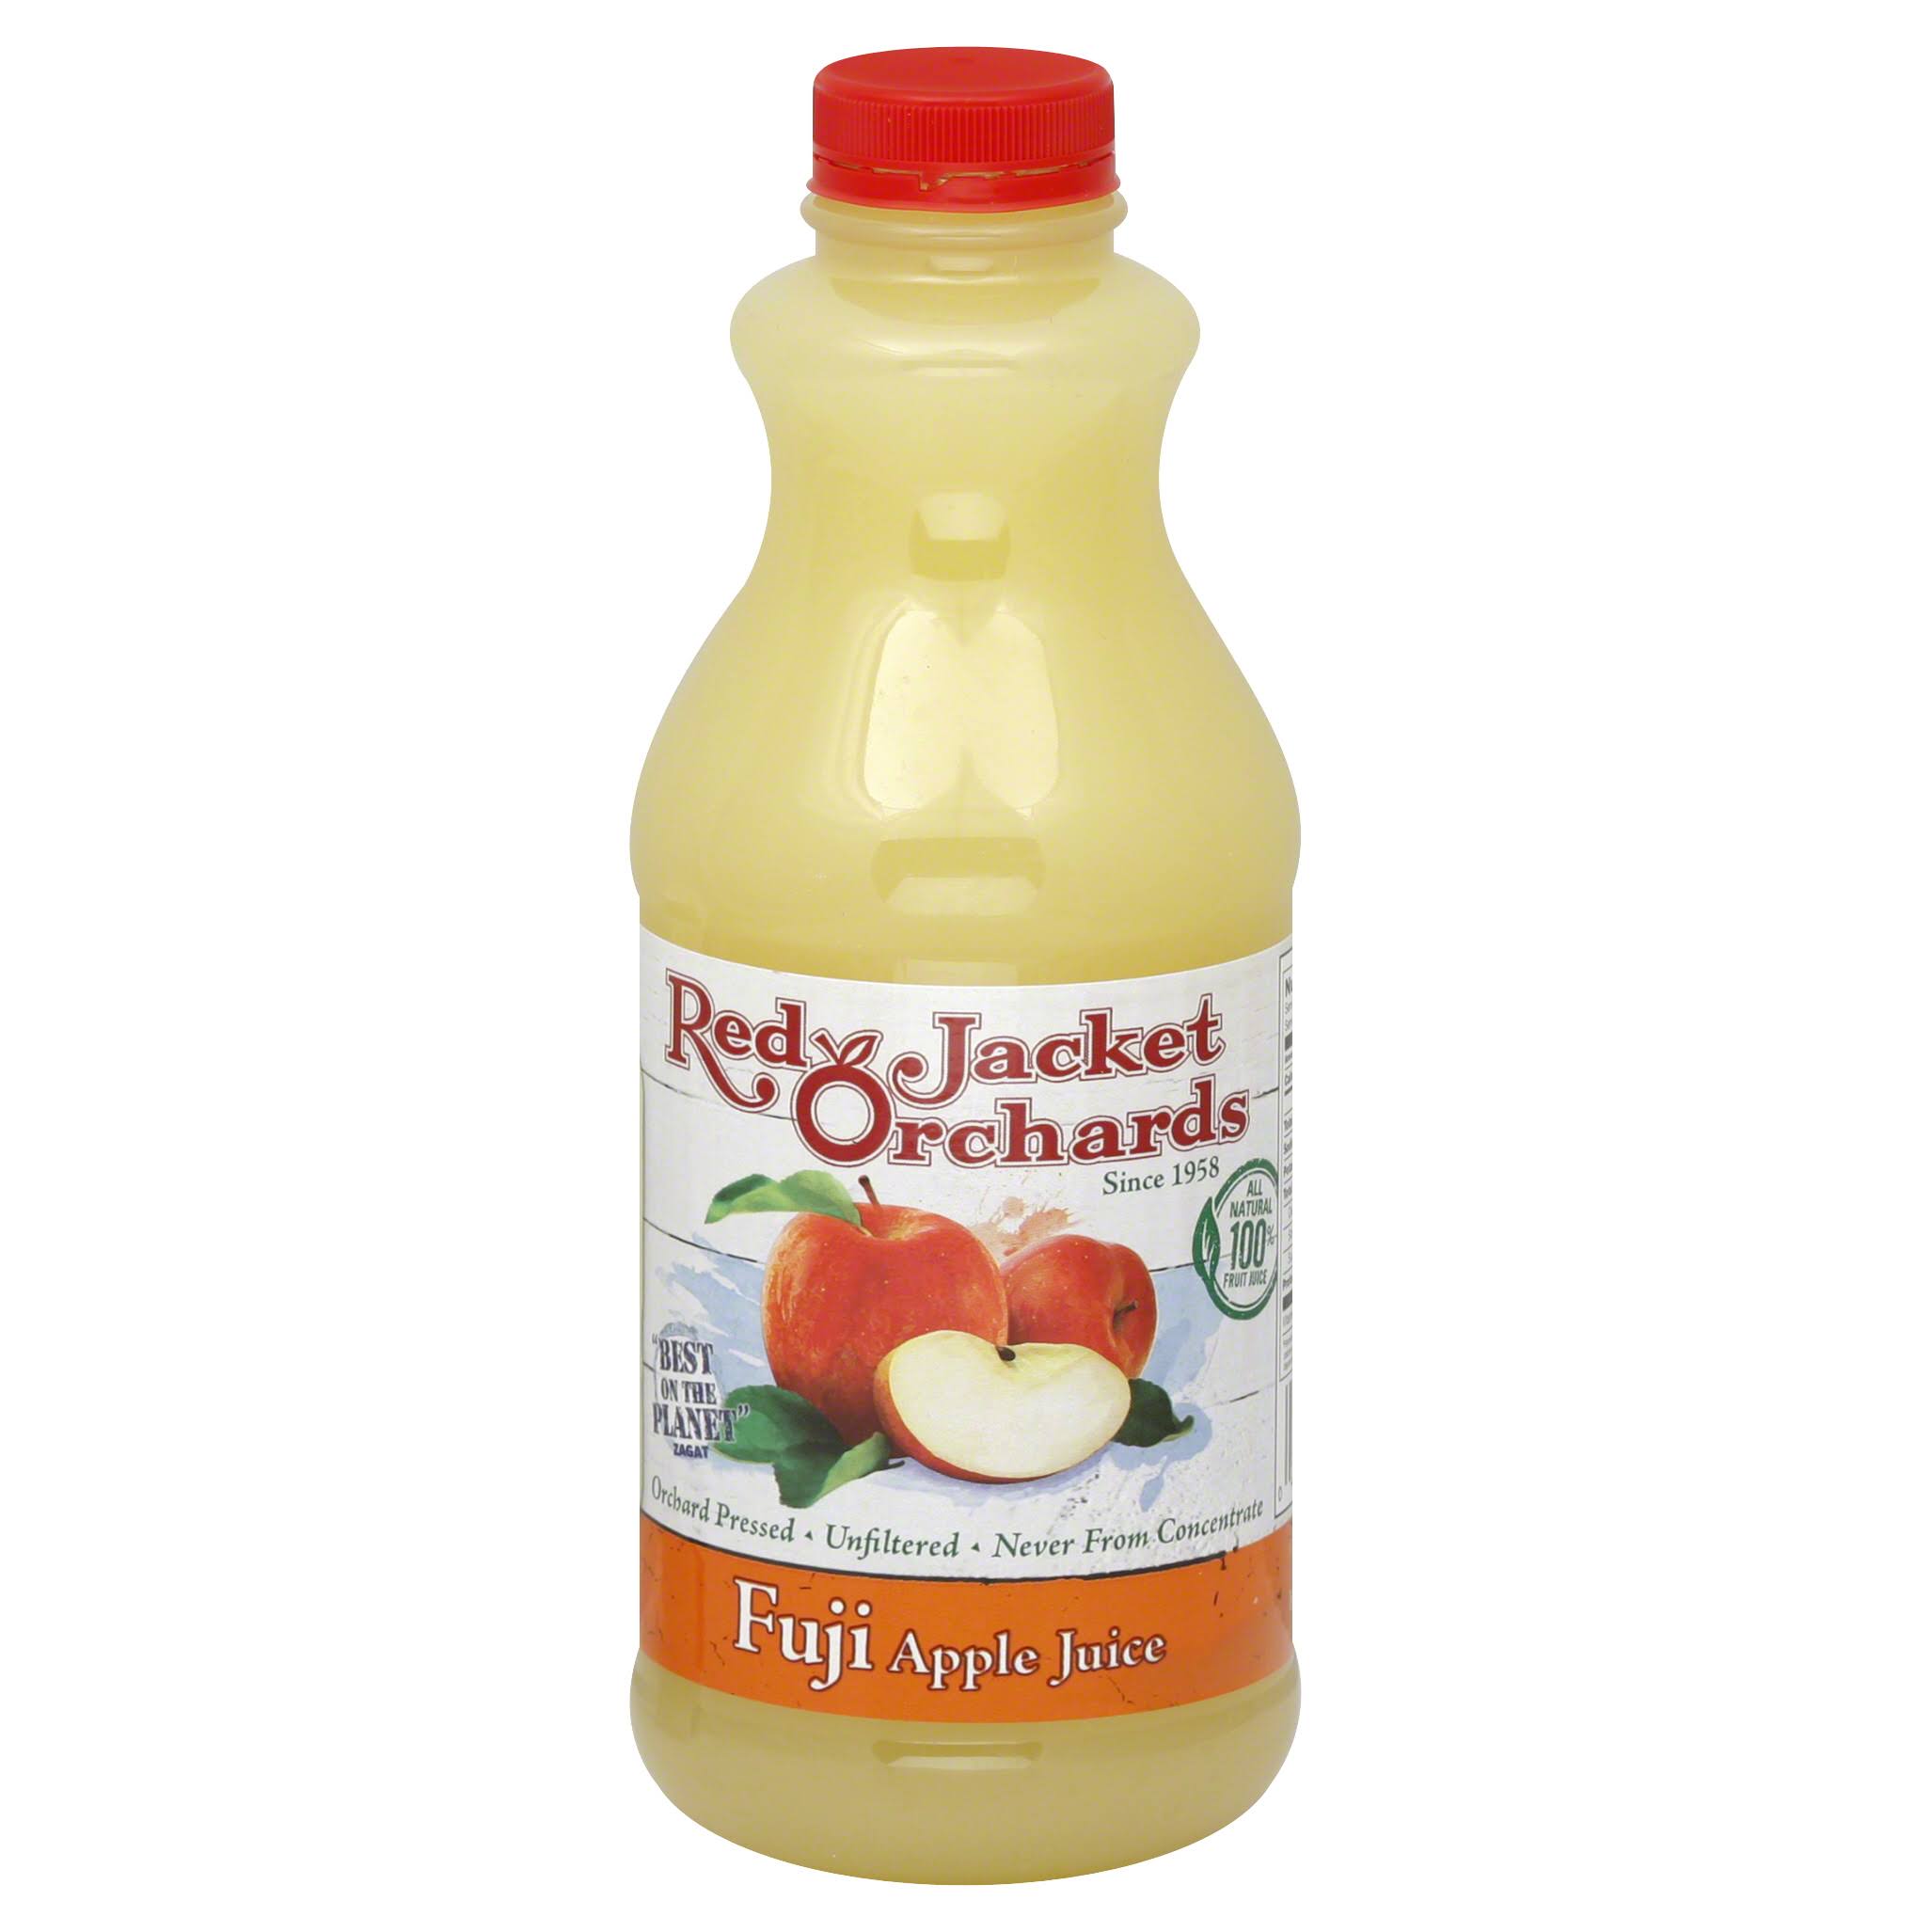 Red Jacket Orchards Juice, Fuji Apple - 32 oz